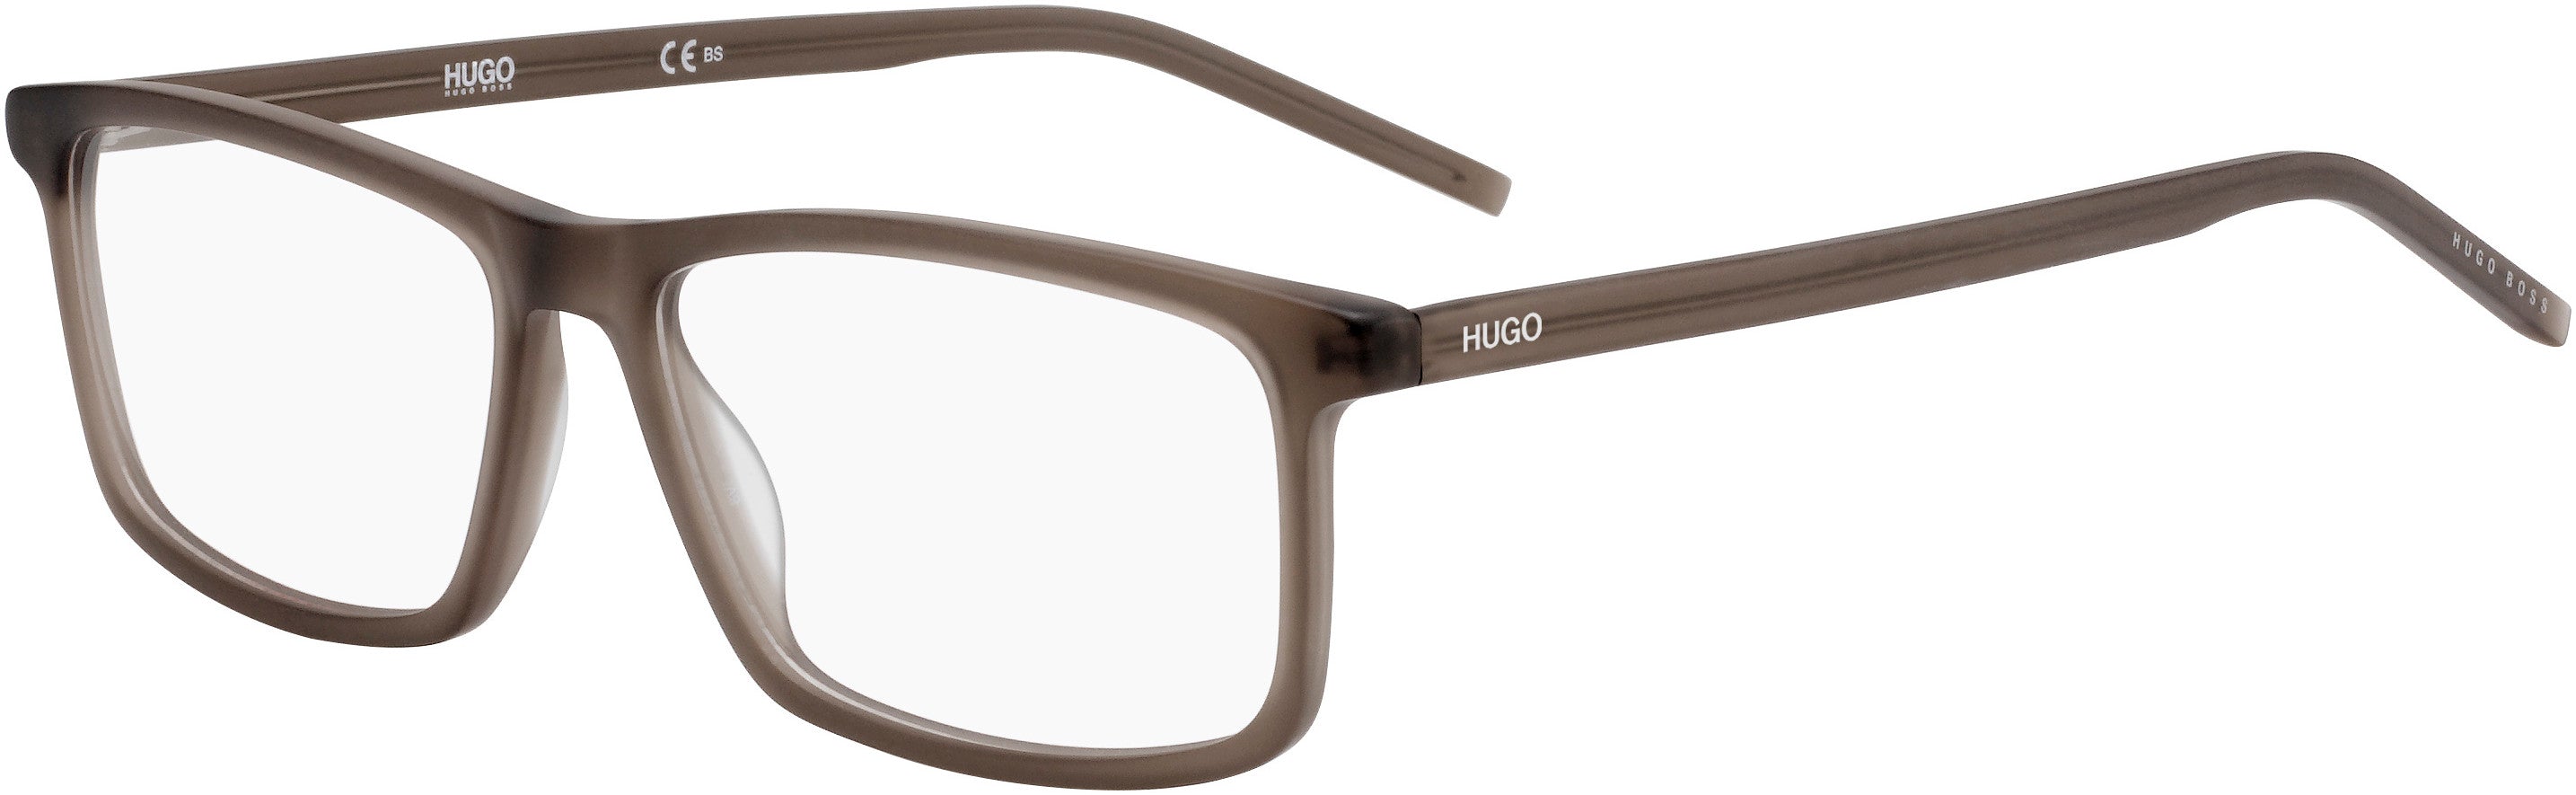 Hugo (hug) Hugo 1025 Square Eyeglasses 04IN-04IN  Matte Brown (00 Demo Lens)